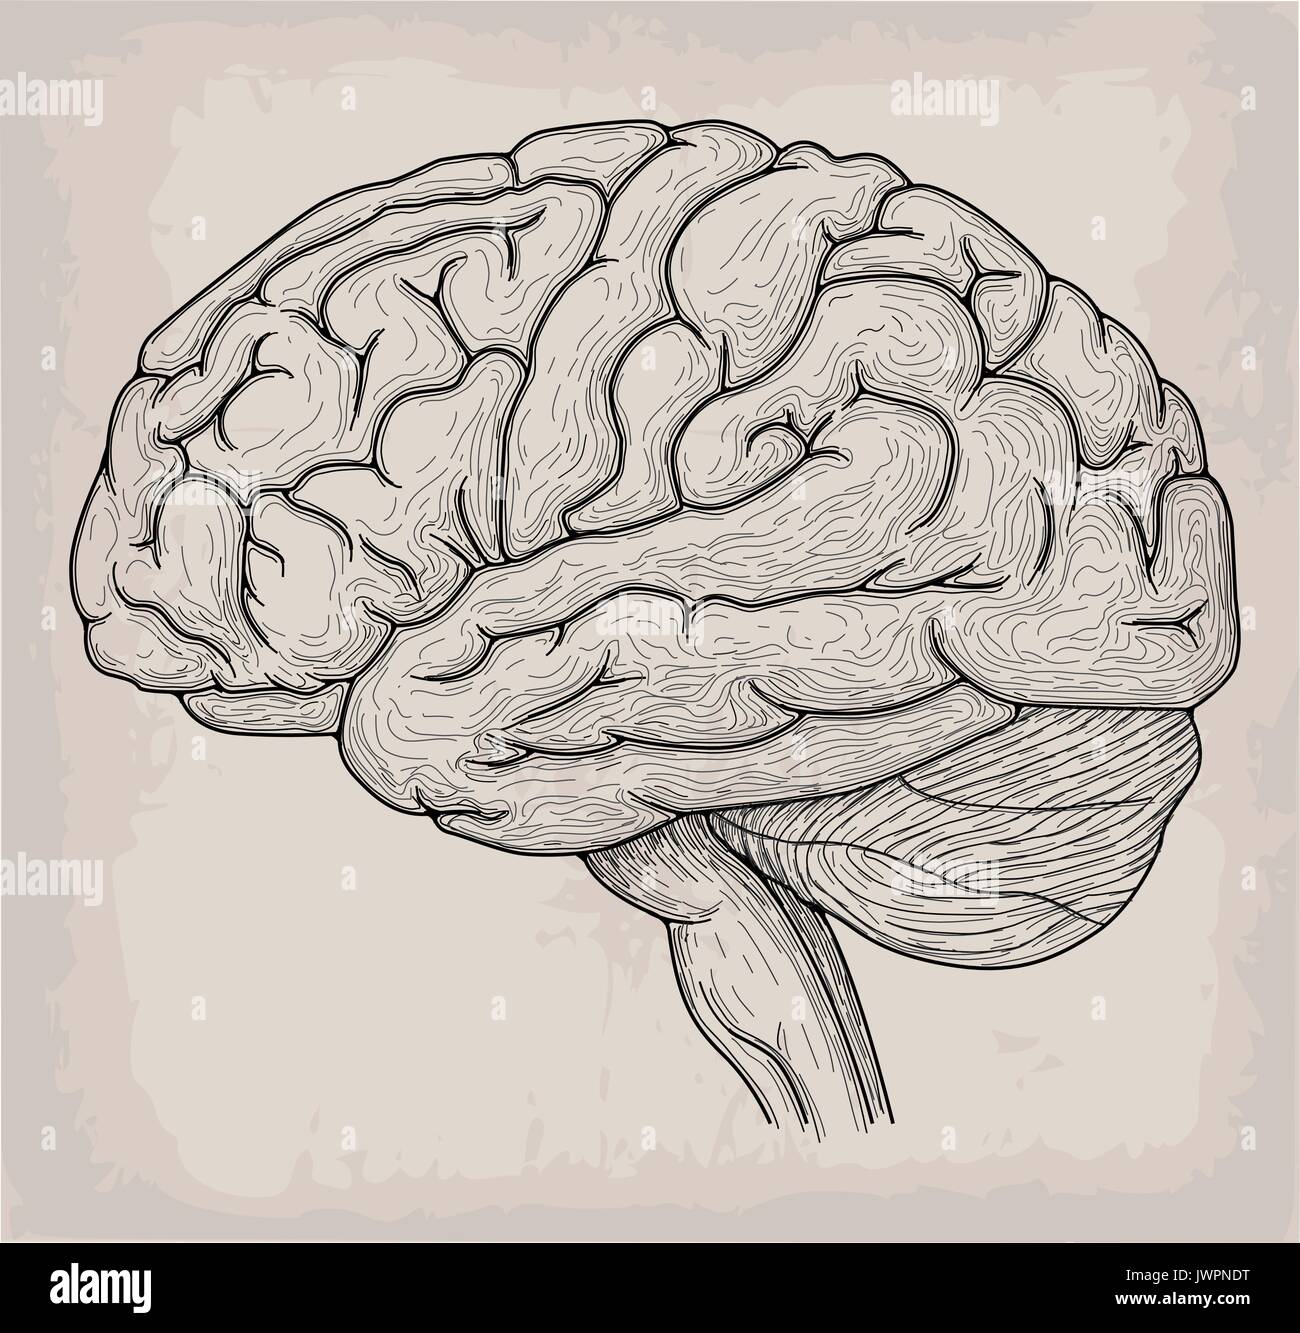 Aggregate more than 210 human brain sketch diagram super hot